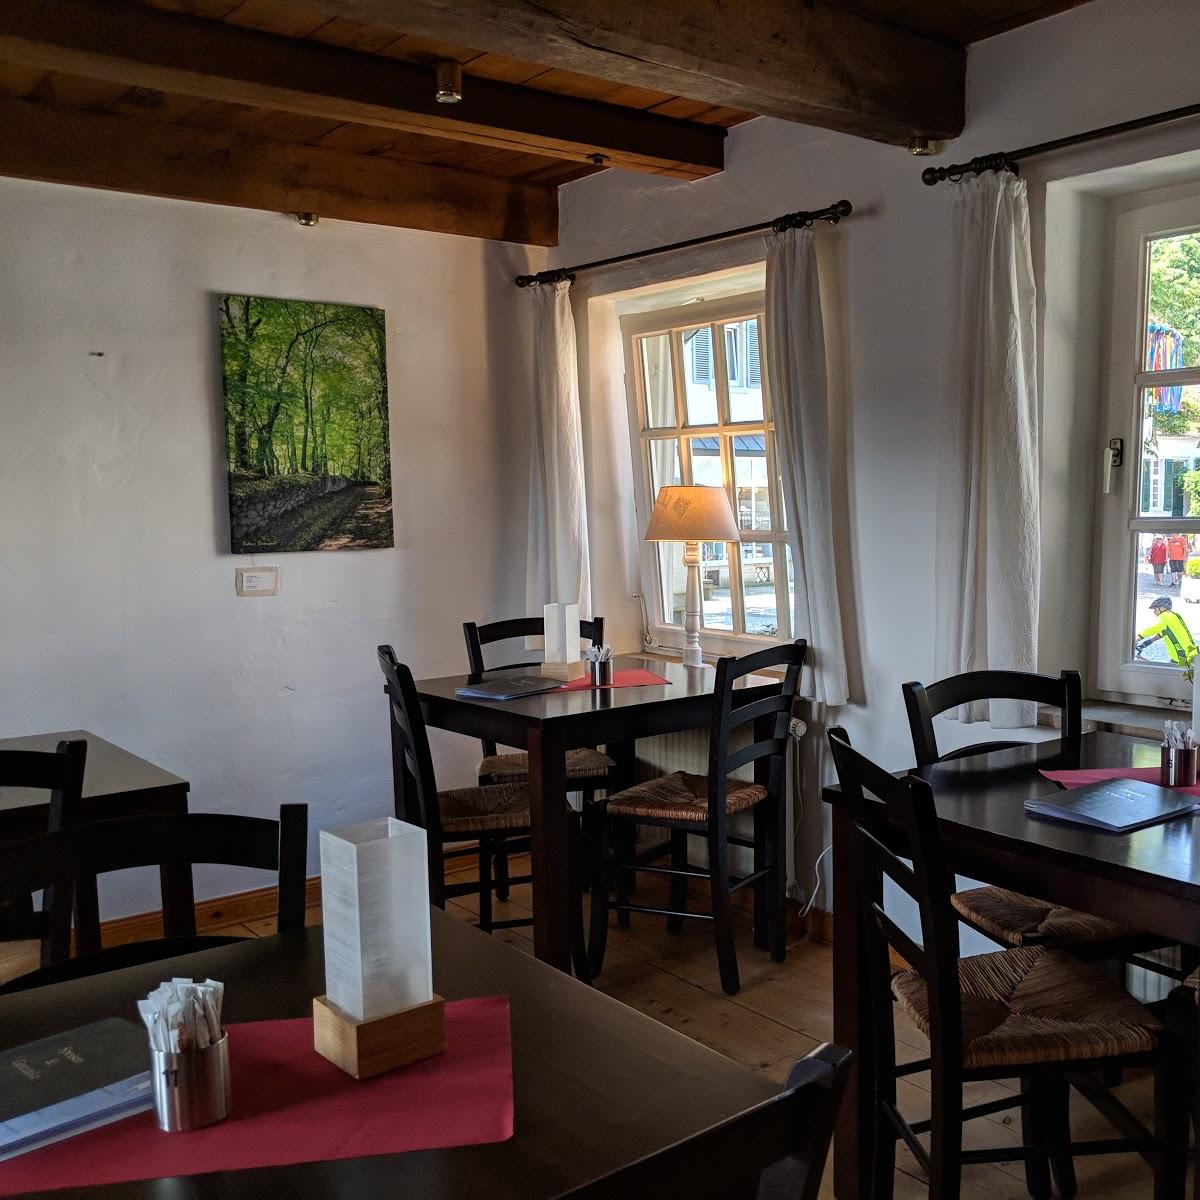 Restaurant "Lindenhof" in Tecklenburg